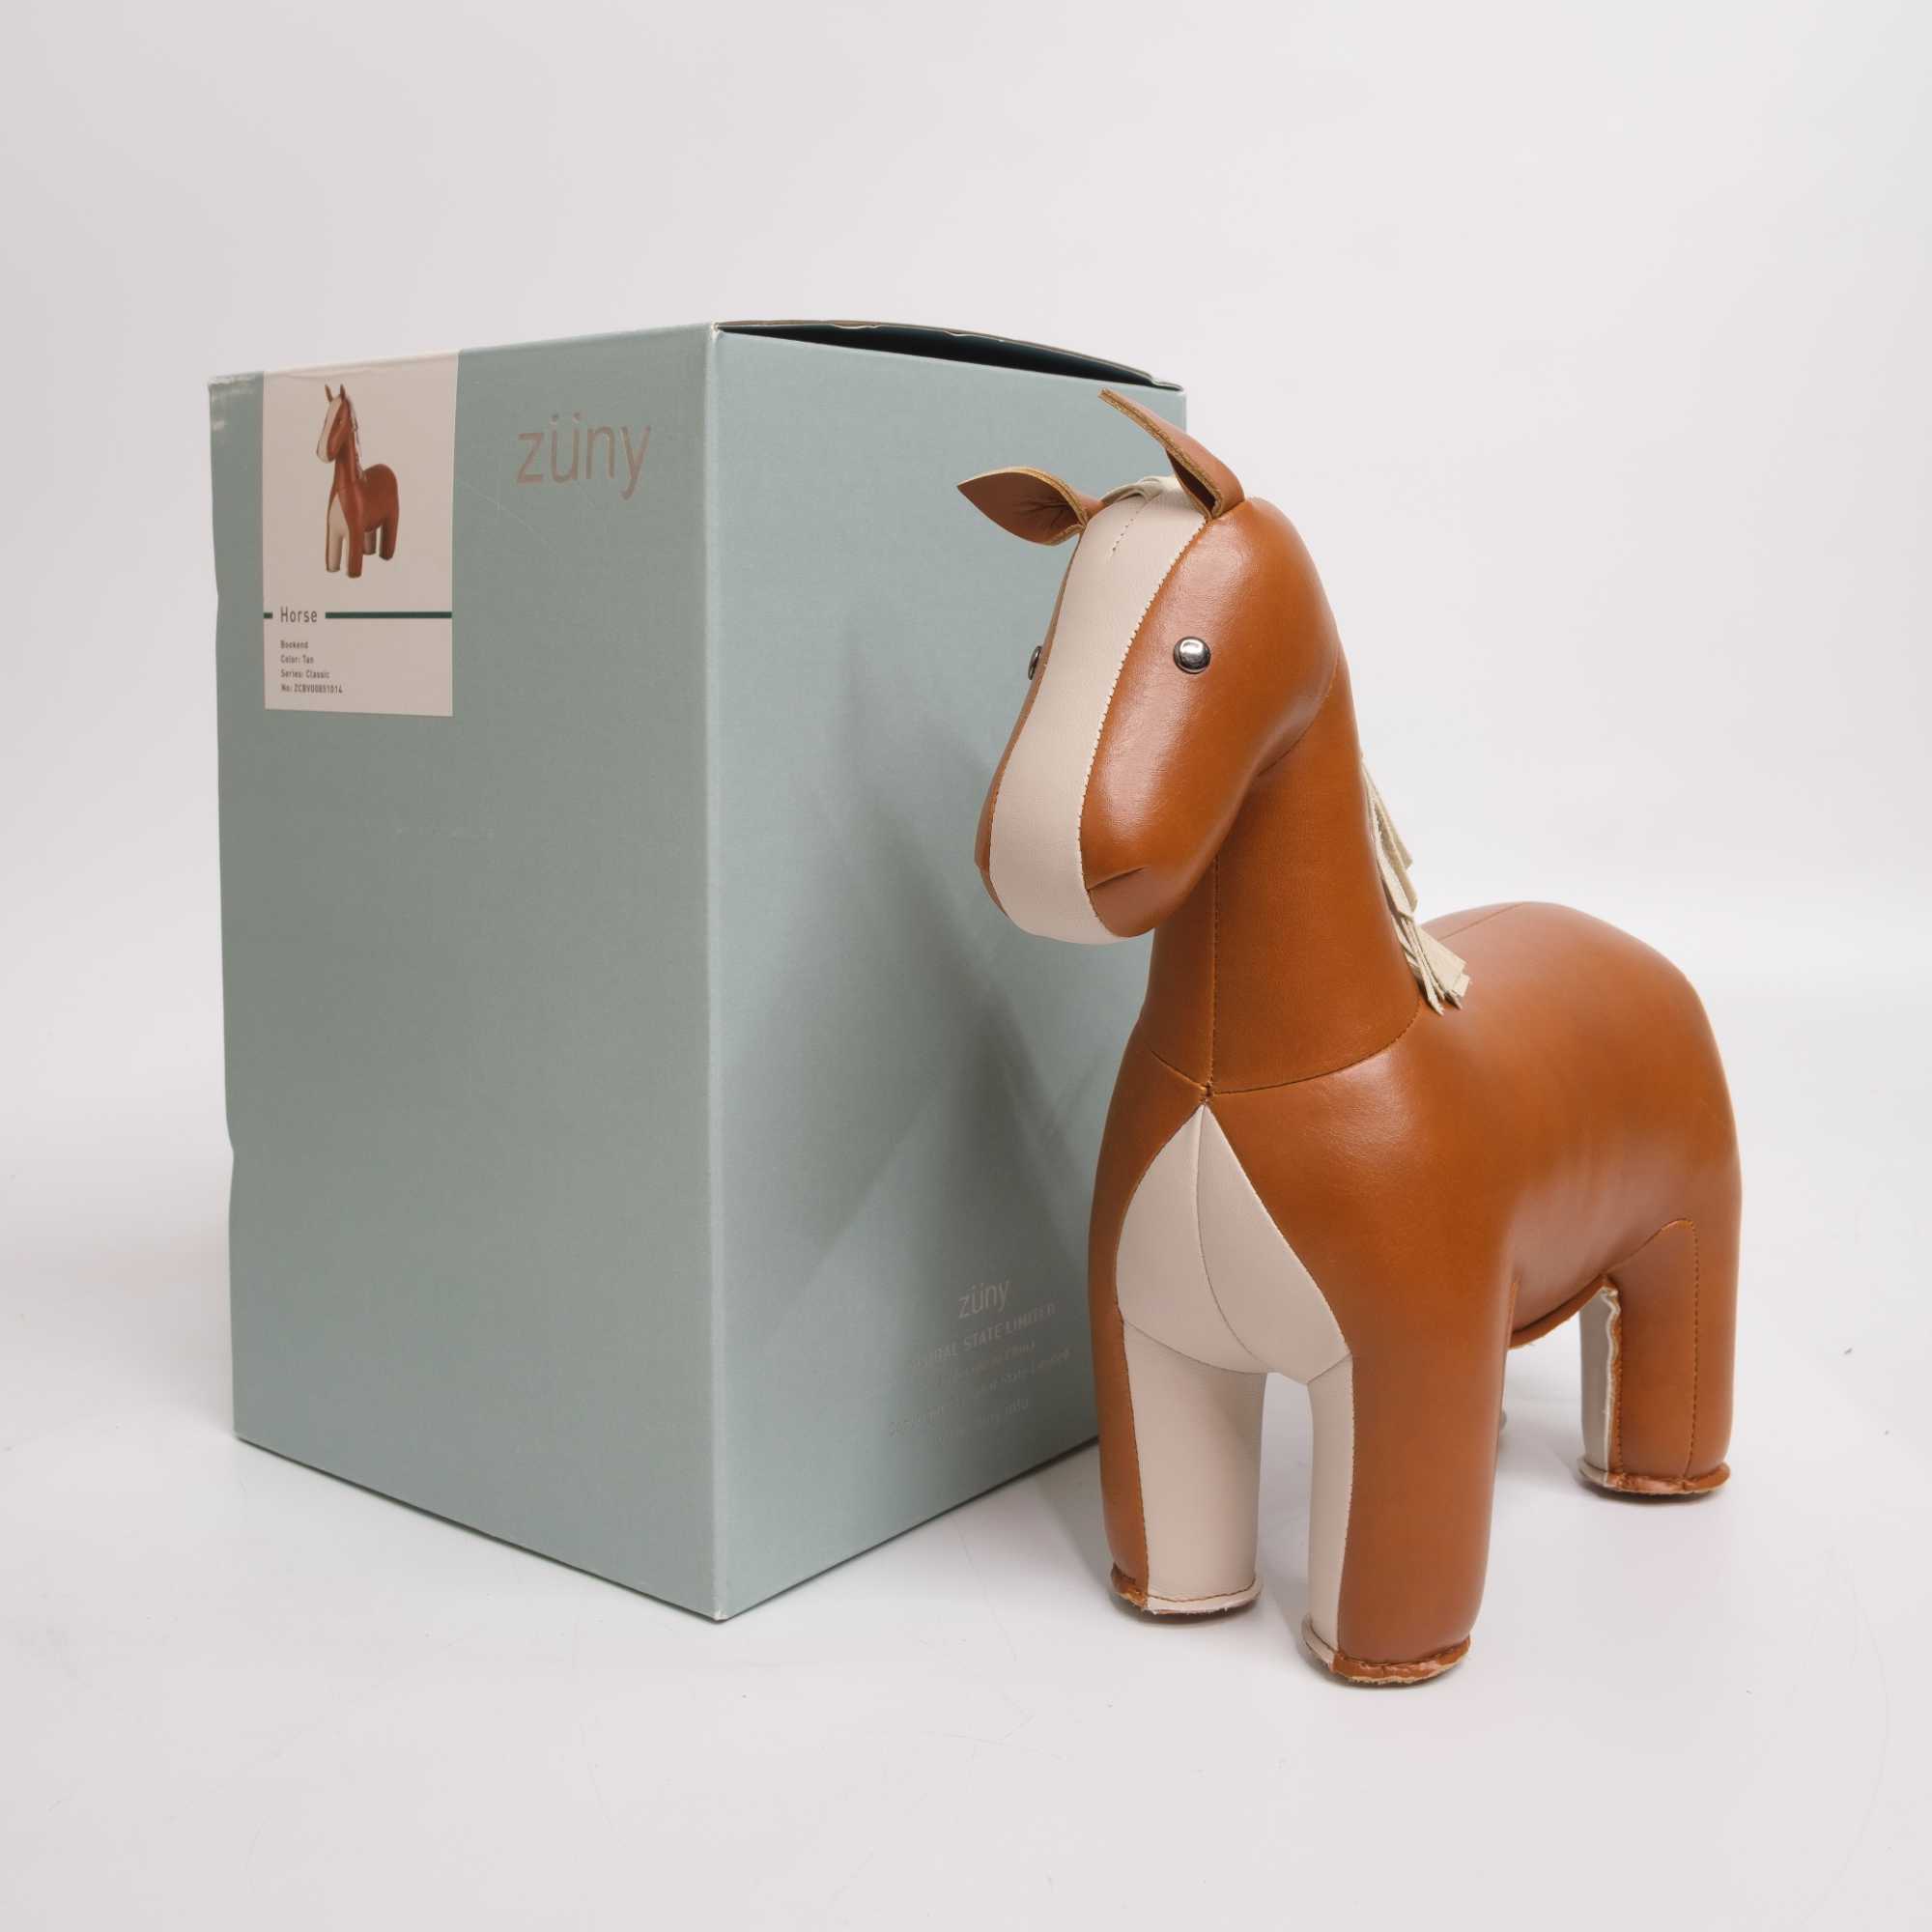 ex-display| Zuny Bookend Classic Horse, Tan/Wheat